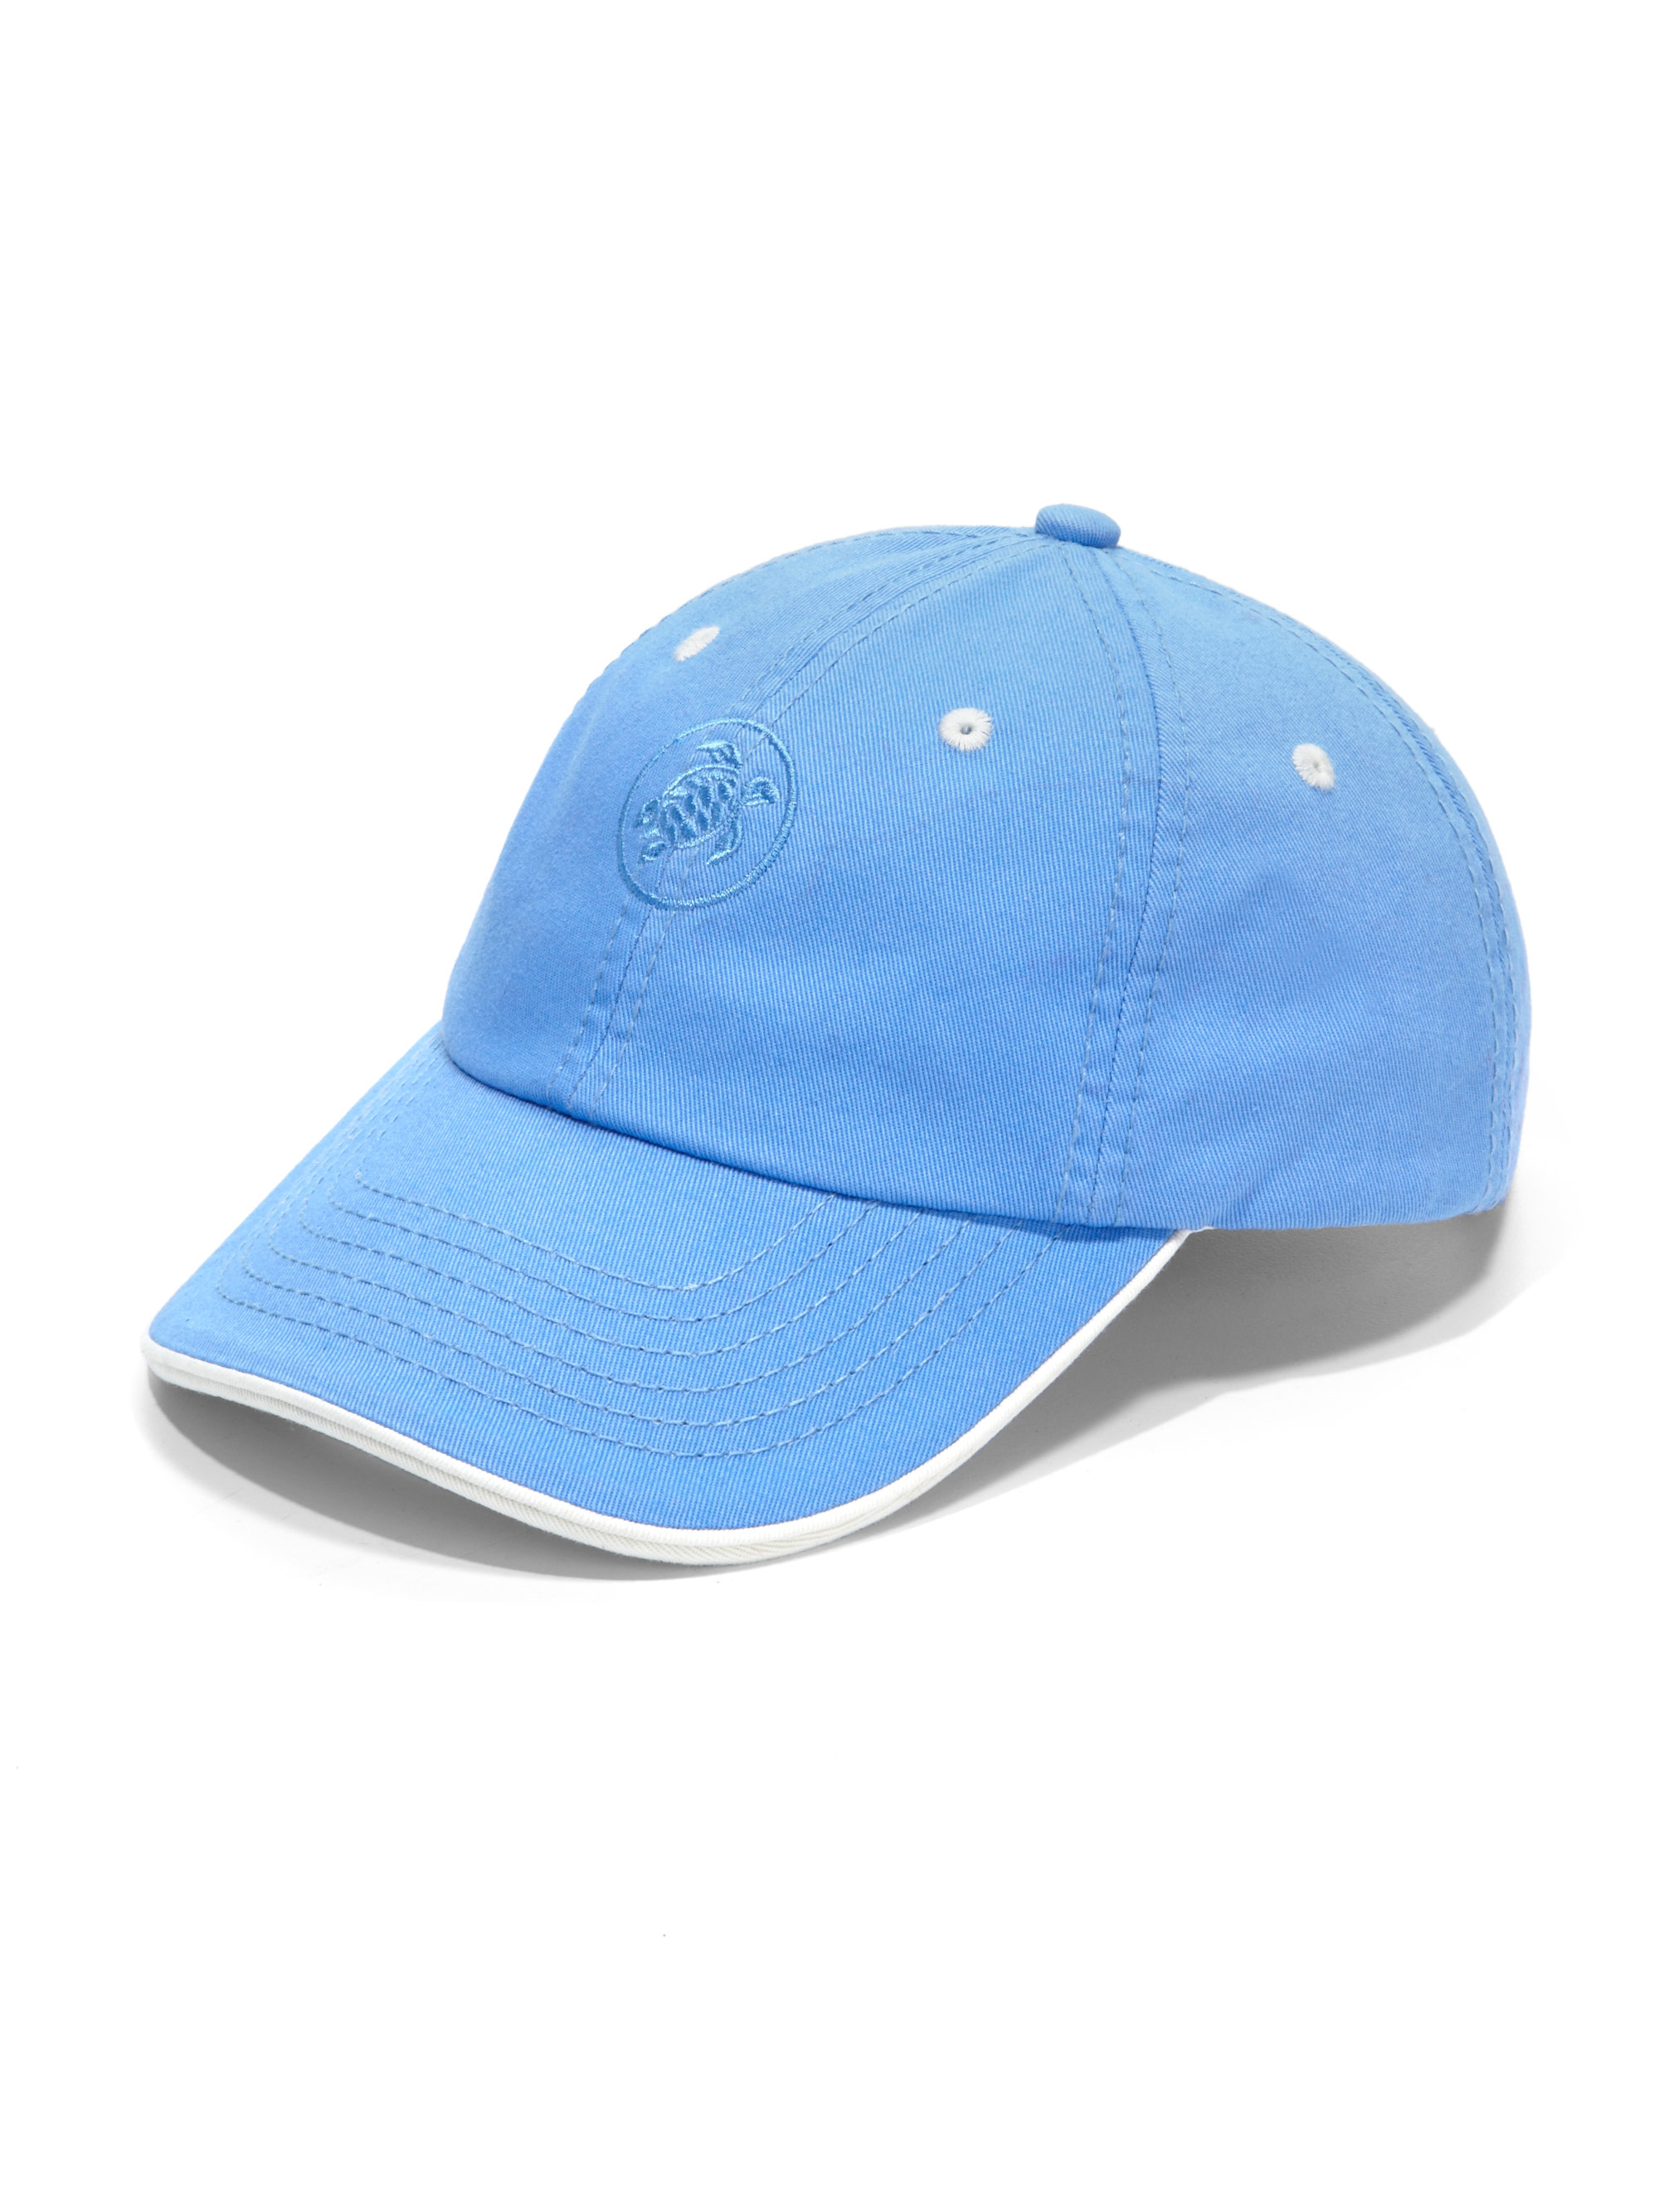 Vilebrequin Embroidered Baseball Cap in Light Blue (Blue) for Men - Lyst